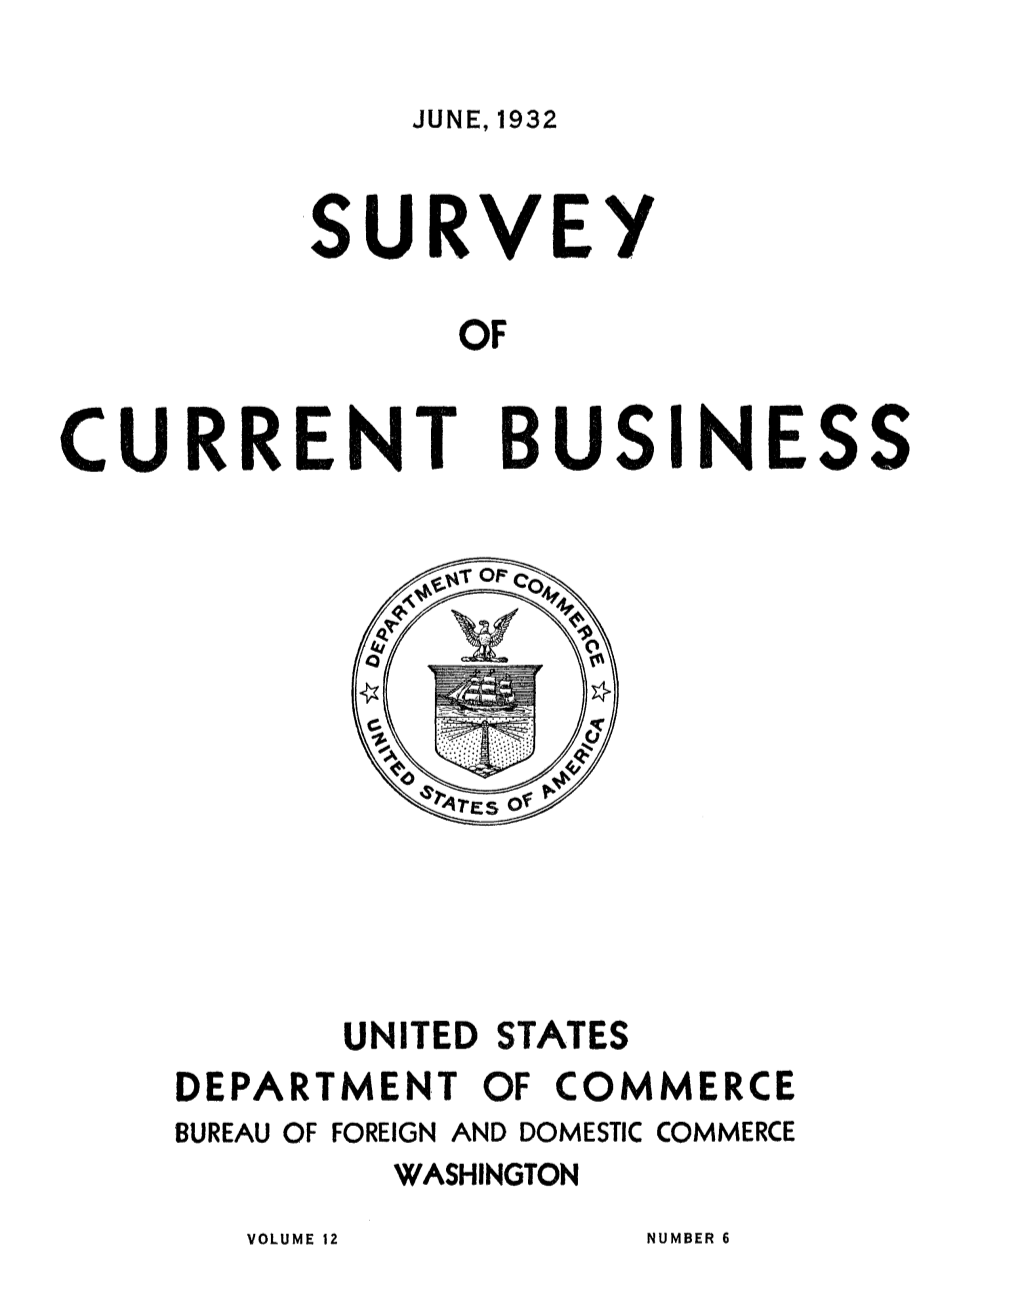 Survey of Current Business June 1932